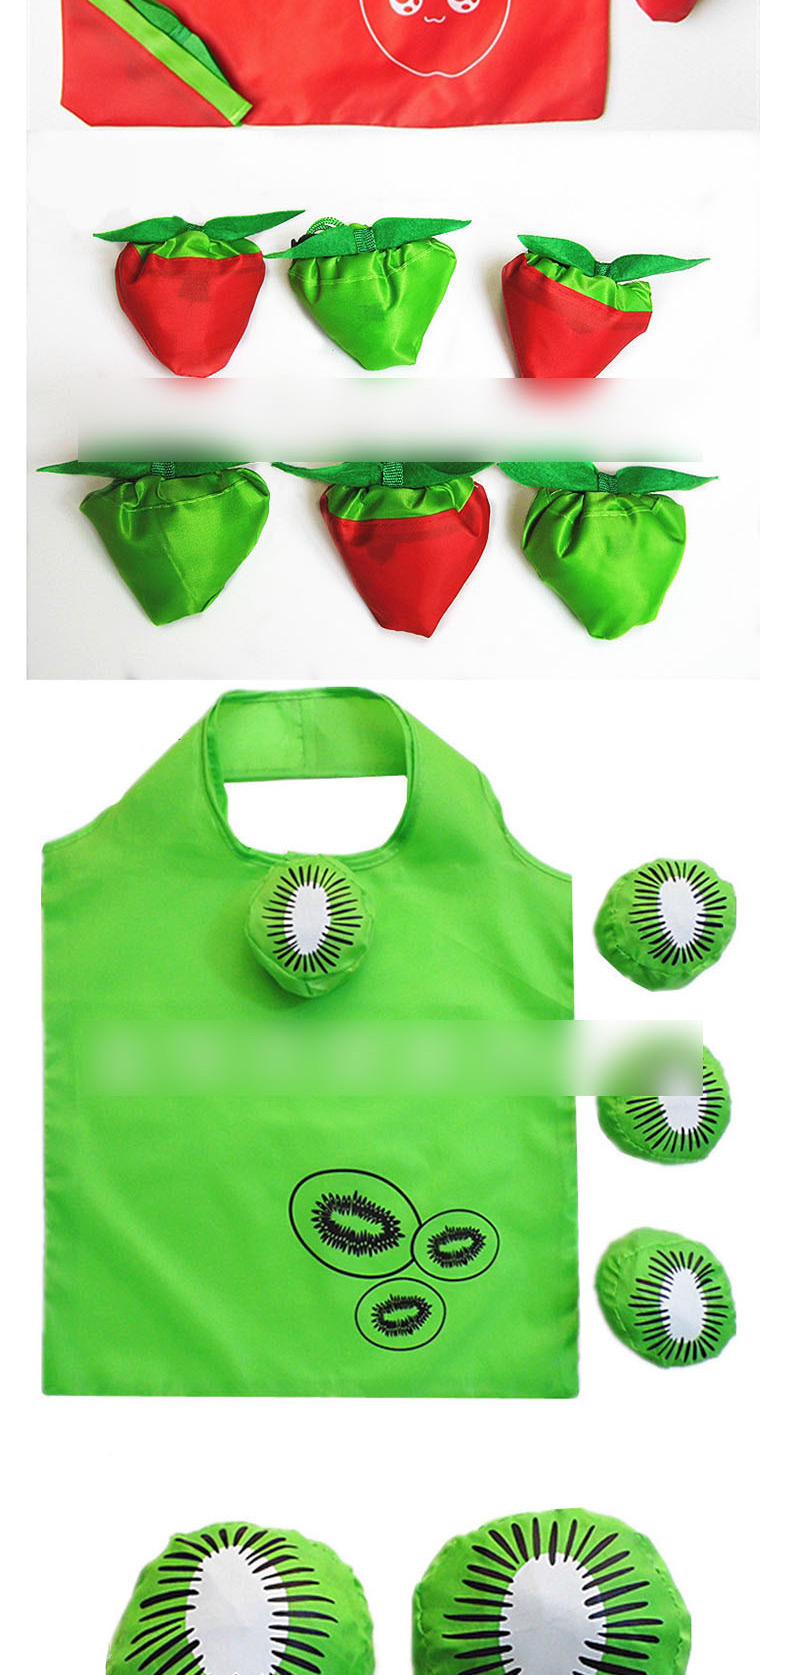 Fashion Lemon Polyester Folded Fruit Green Bag Shopping Bag,Handbags